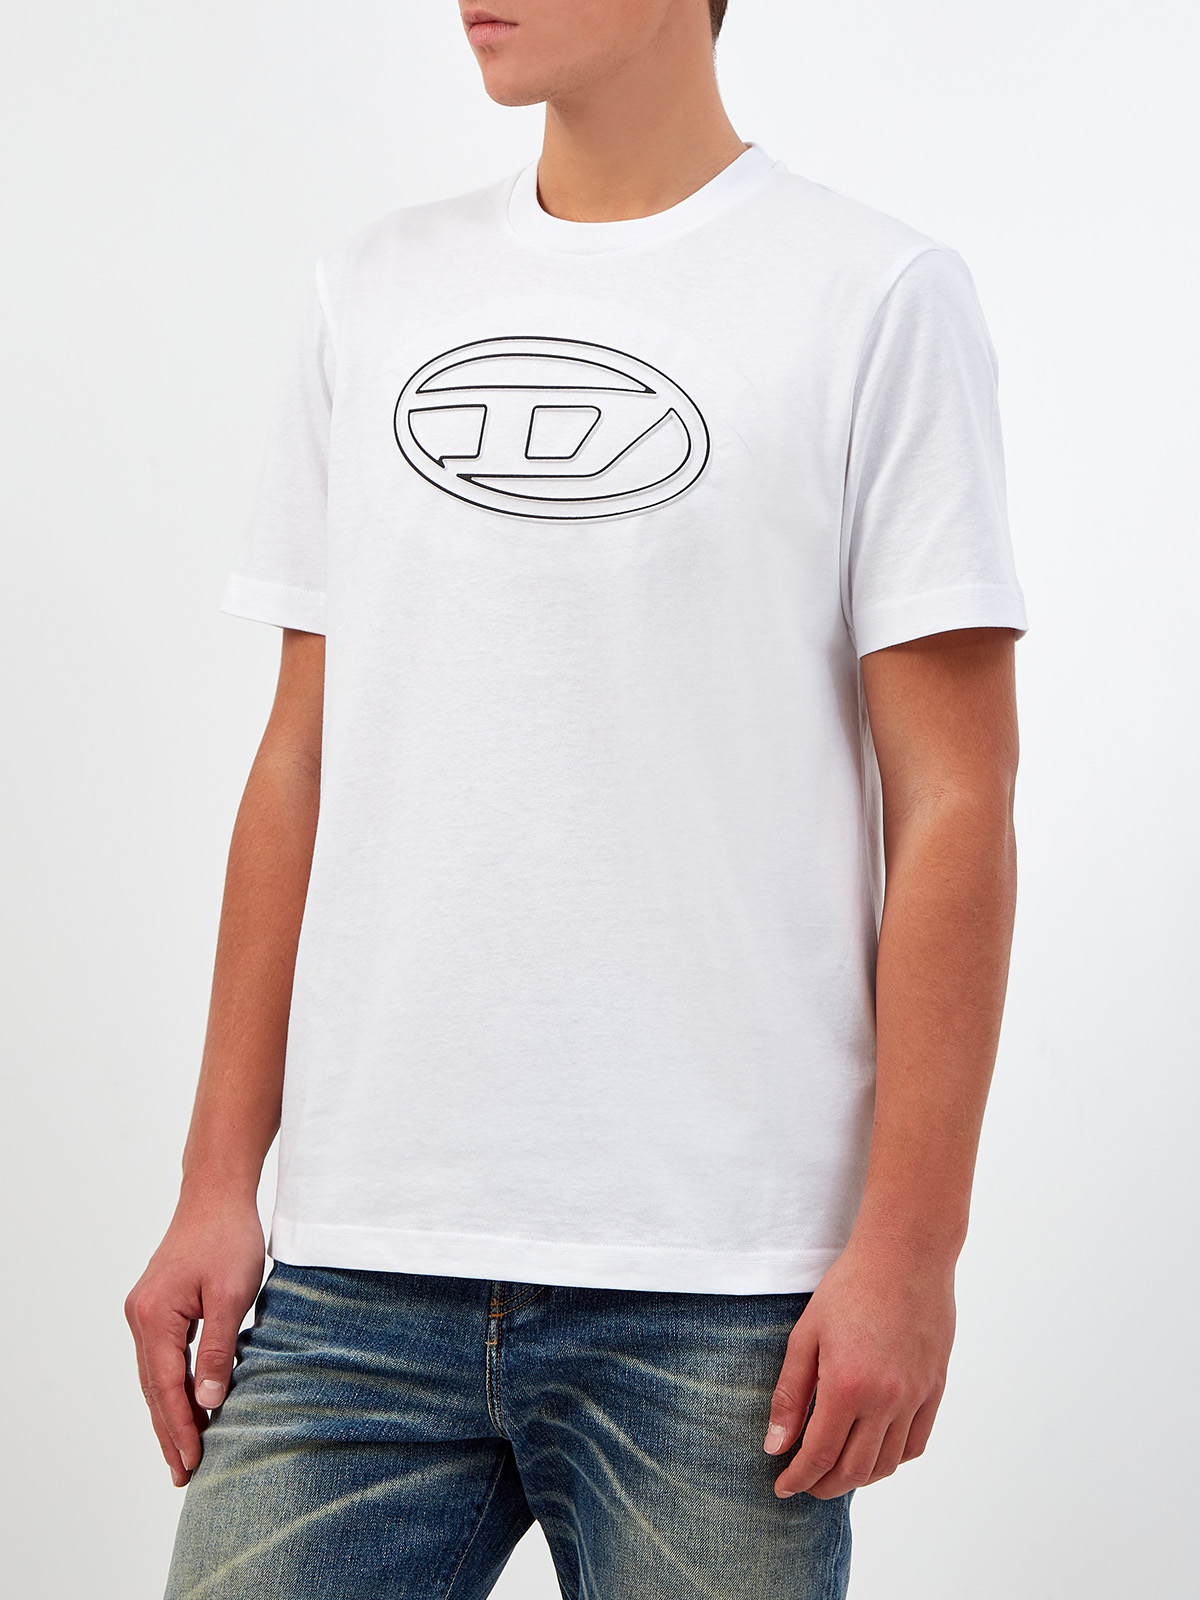 Хлопковая футболка T-Just с макро-логотипом Oval D DIESEL, цвет белый, размер S;M;L;XL;2XL;3XL - фото 3